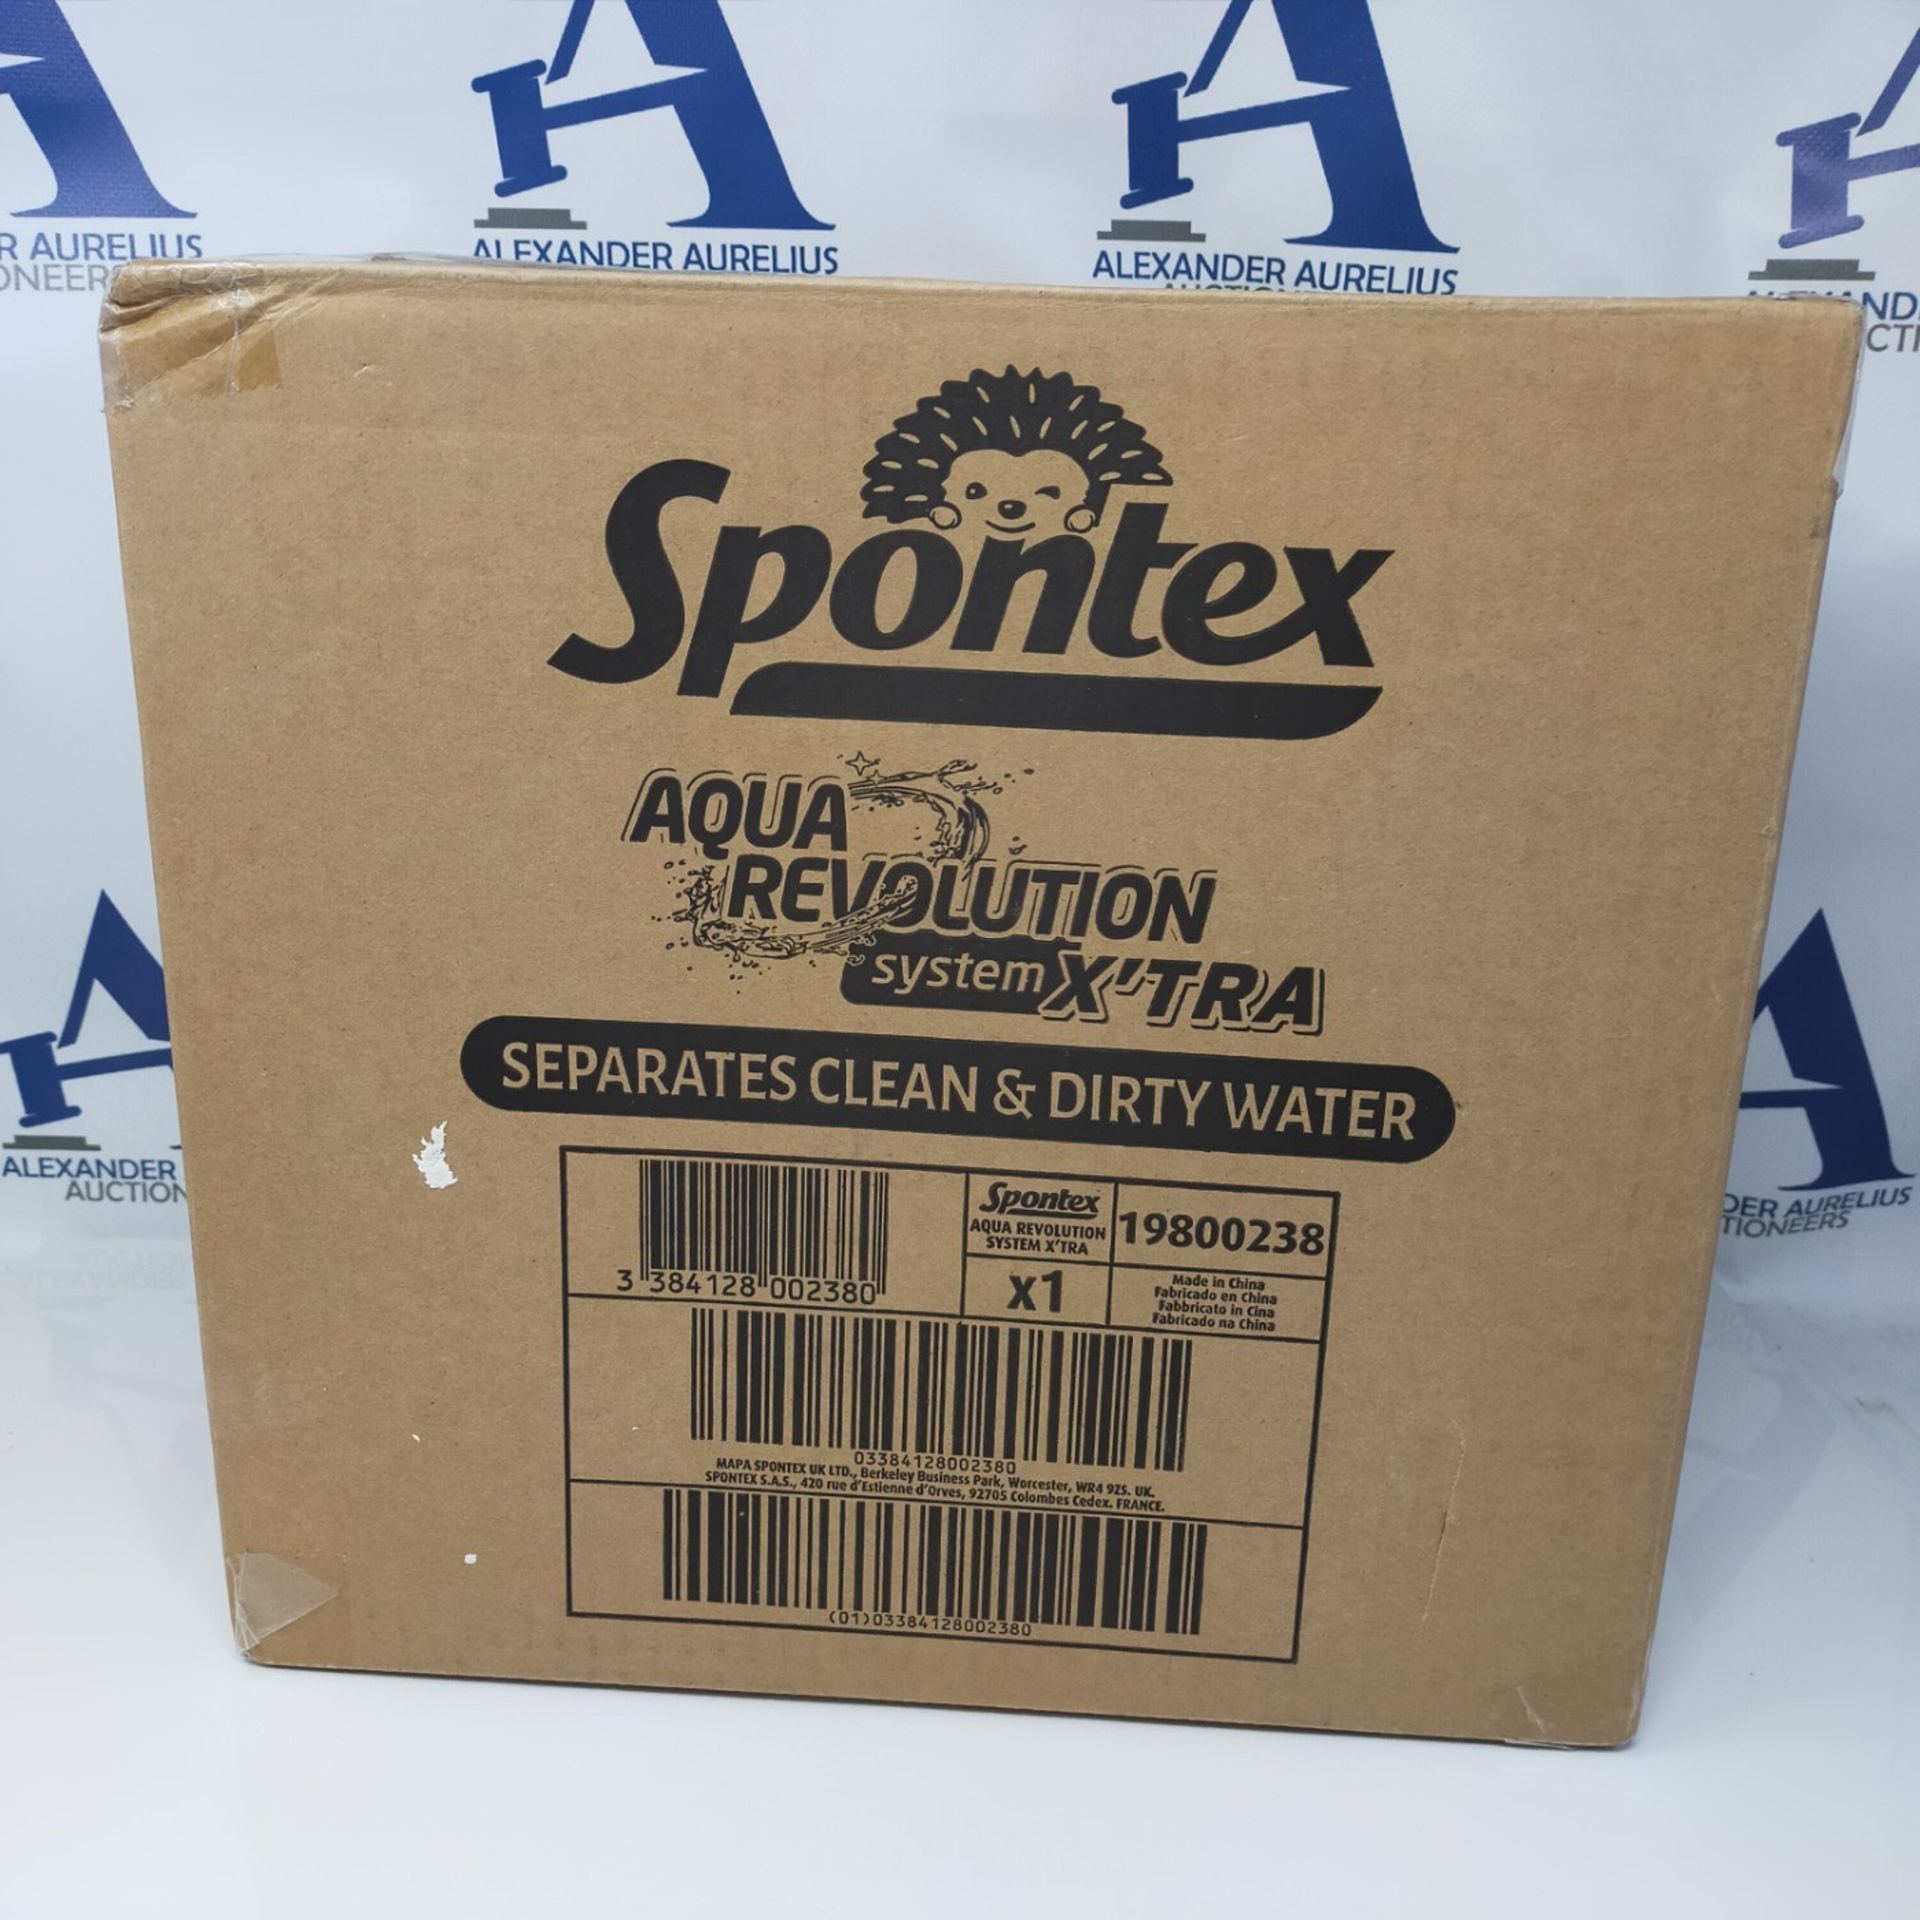 Spontex Aqua Revolution System X'tra Floor Mop and Bucket Set  Separates Clean & Di - Image 2 of 3